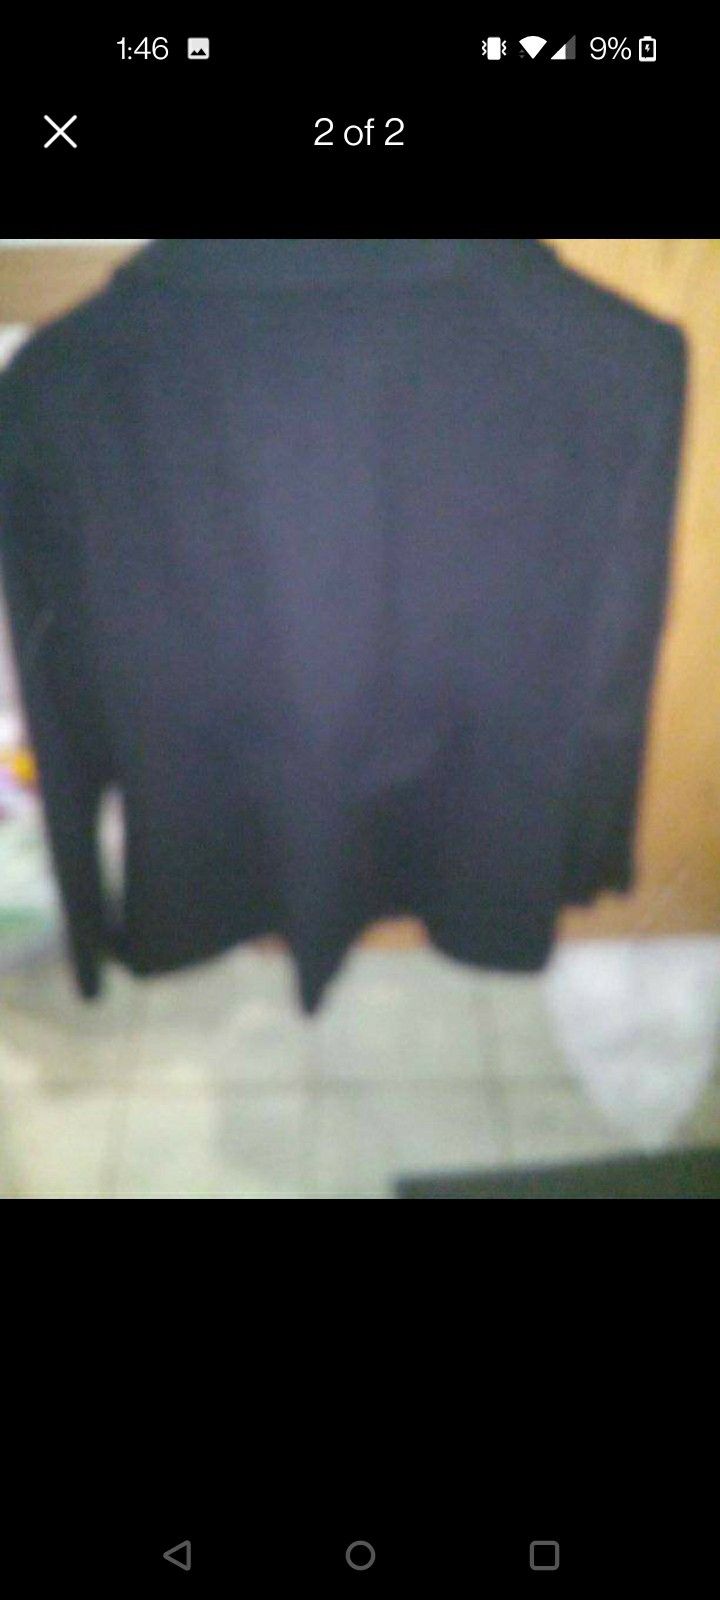 Black Rivet Pea Jacket Men's Size Large